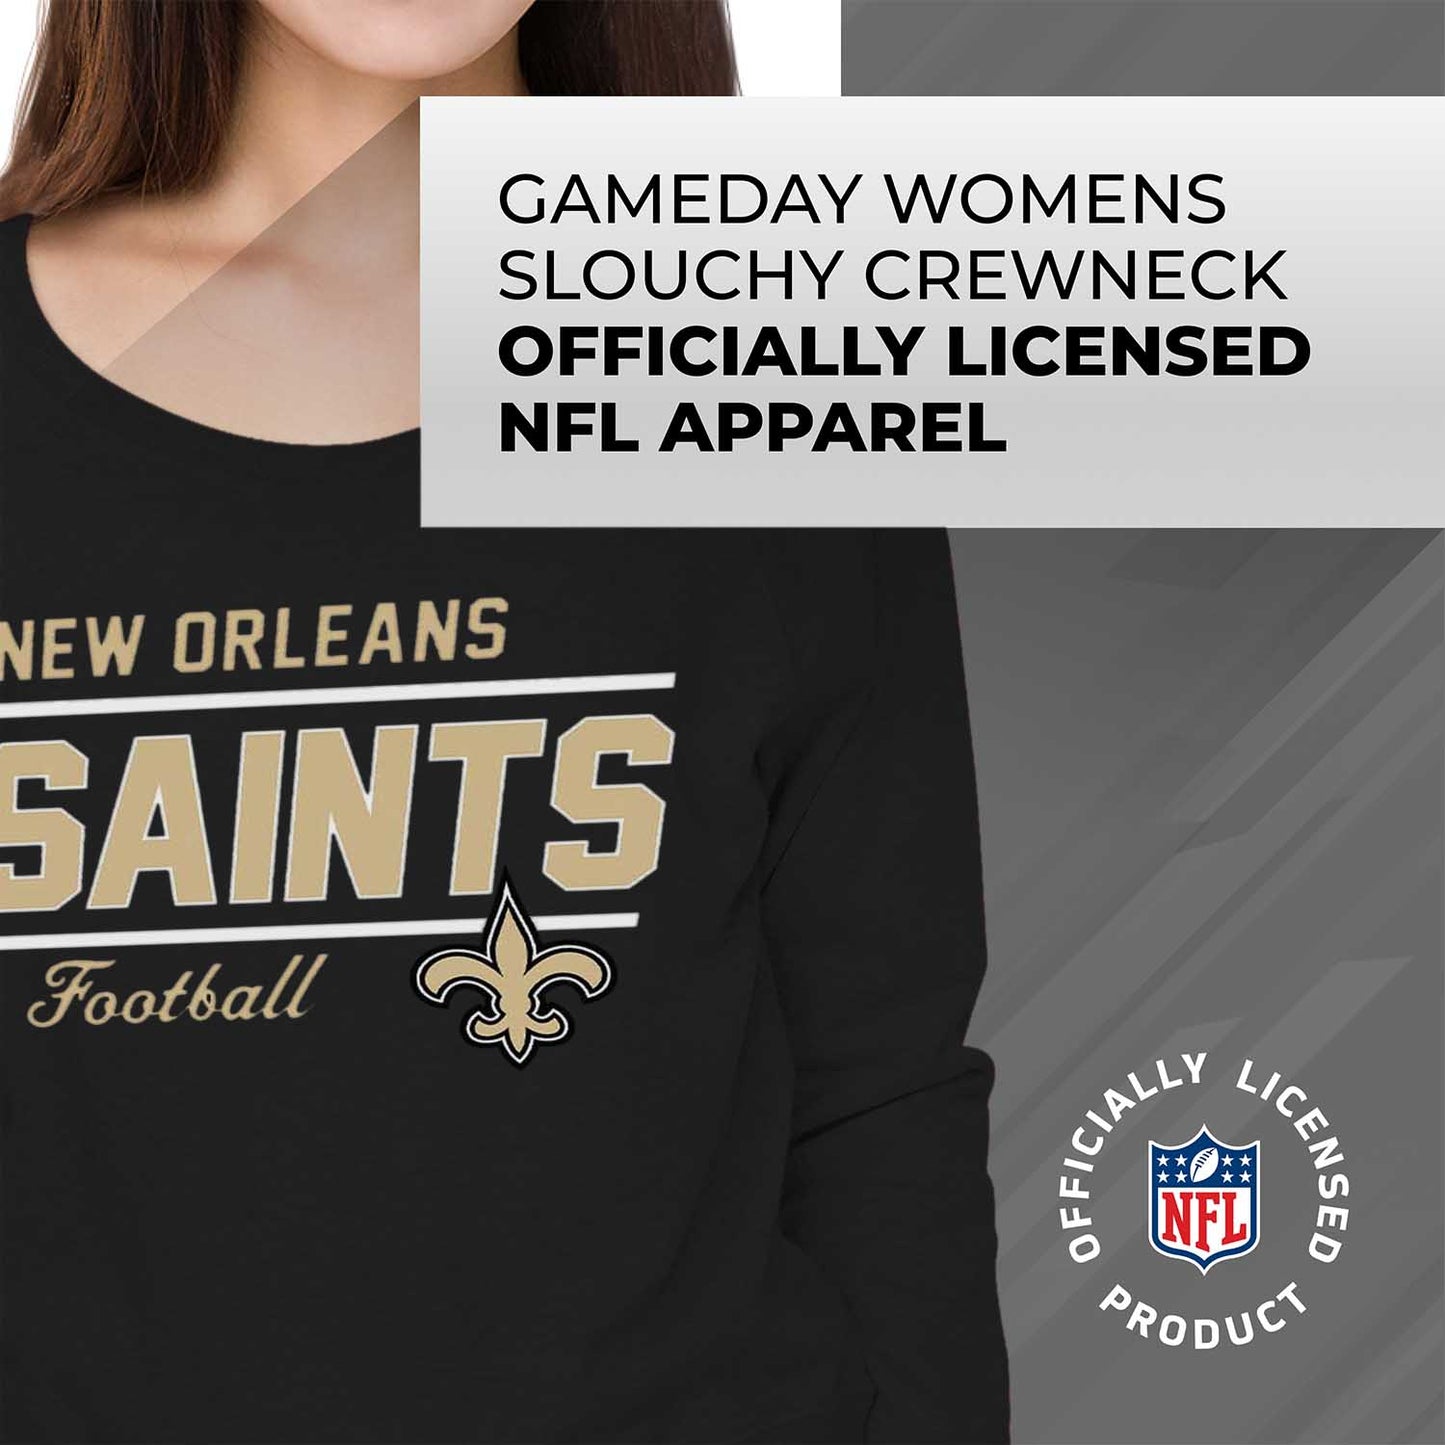 New Orleans Saints NFL Womens Crew Neck Light Weight - Black